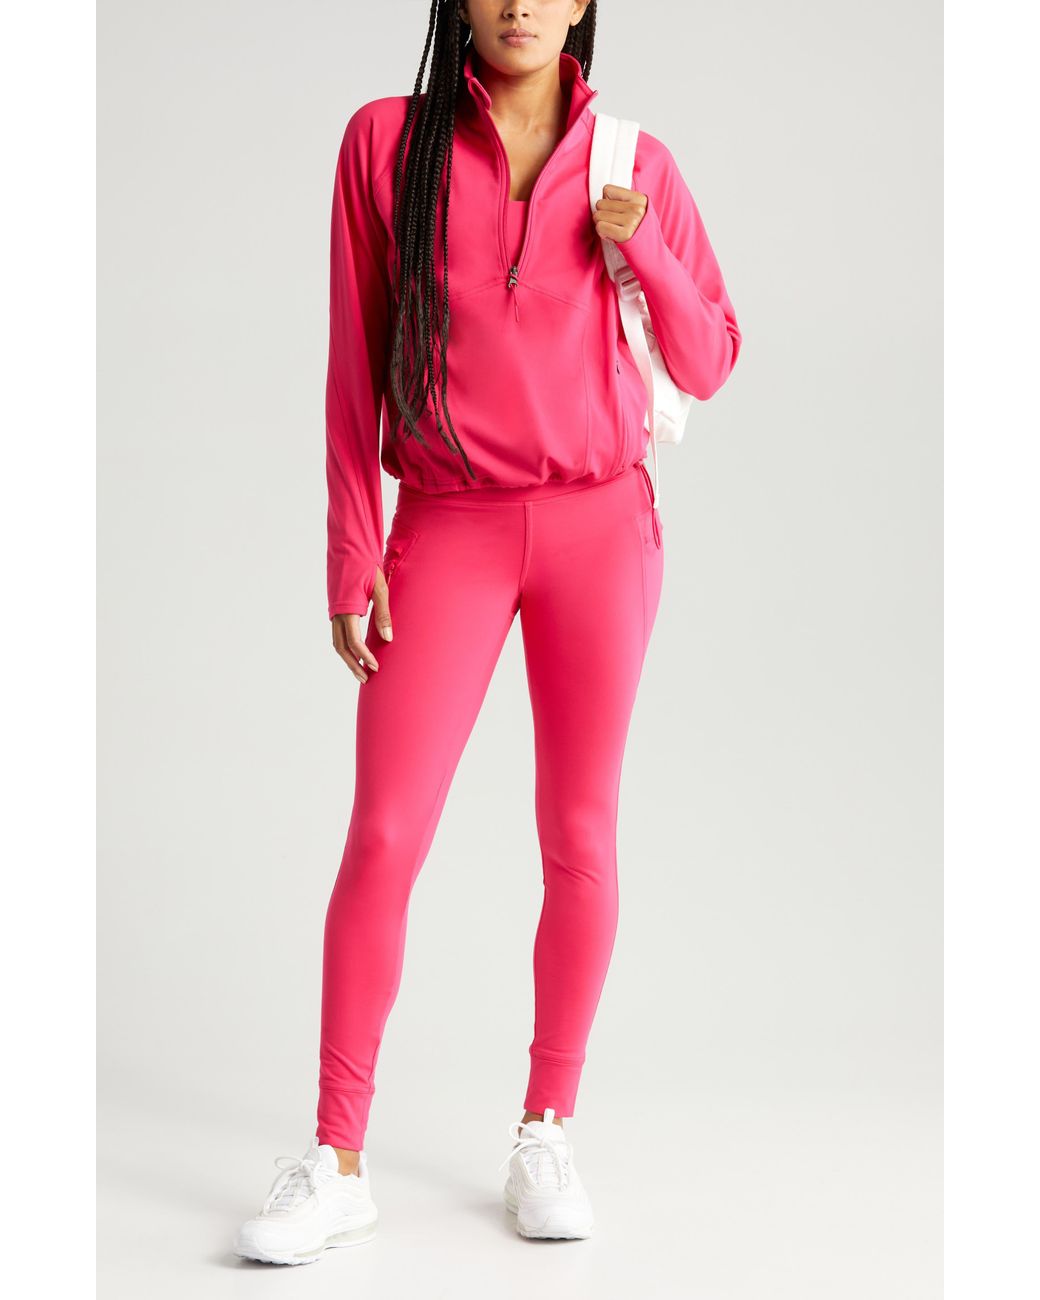 Zella Fleece Lined Performance Pocket leggings in Pink